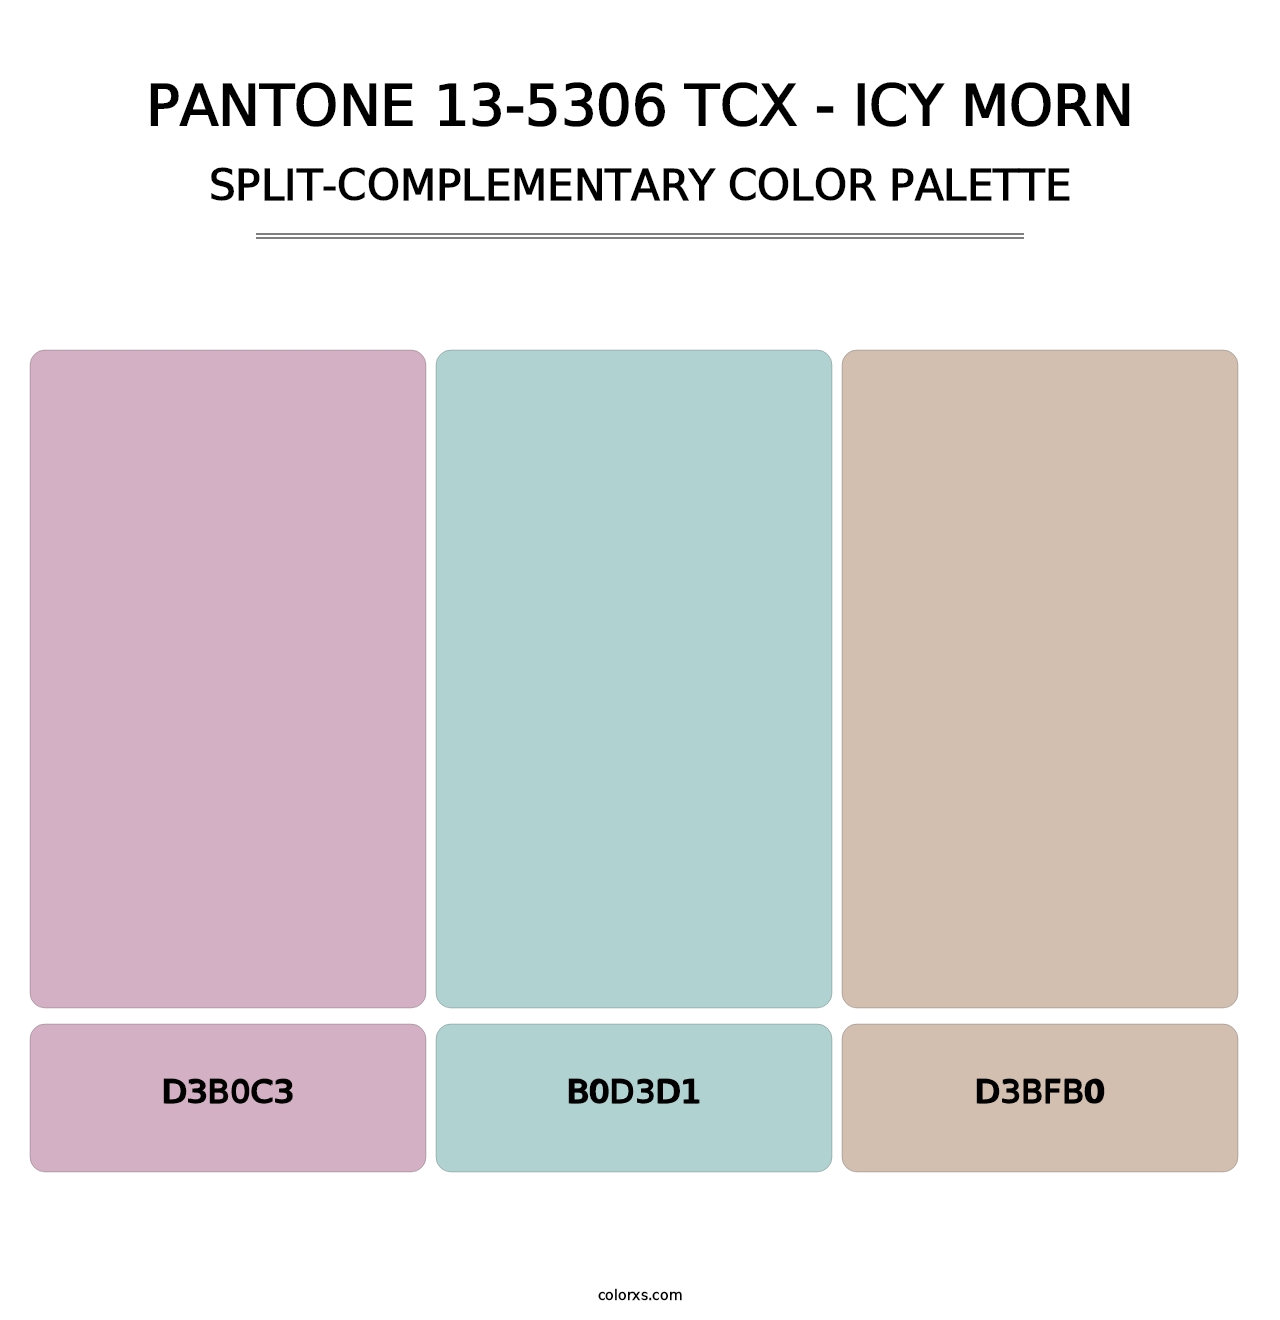 PANTONE 13-5306 TCX - Icy Morn - Split-Complementary Color Palette